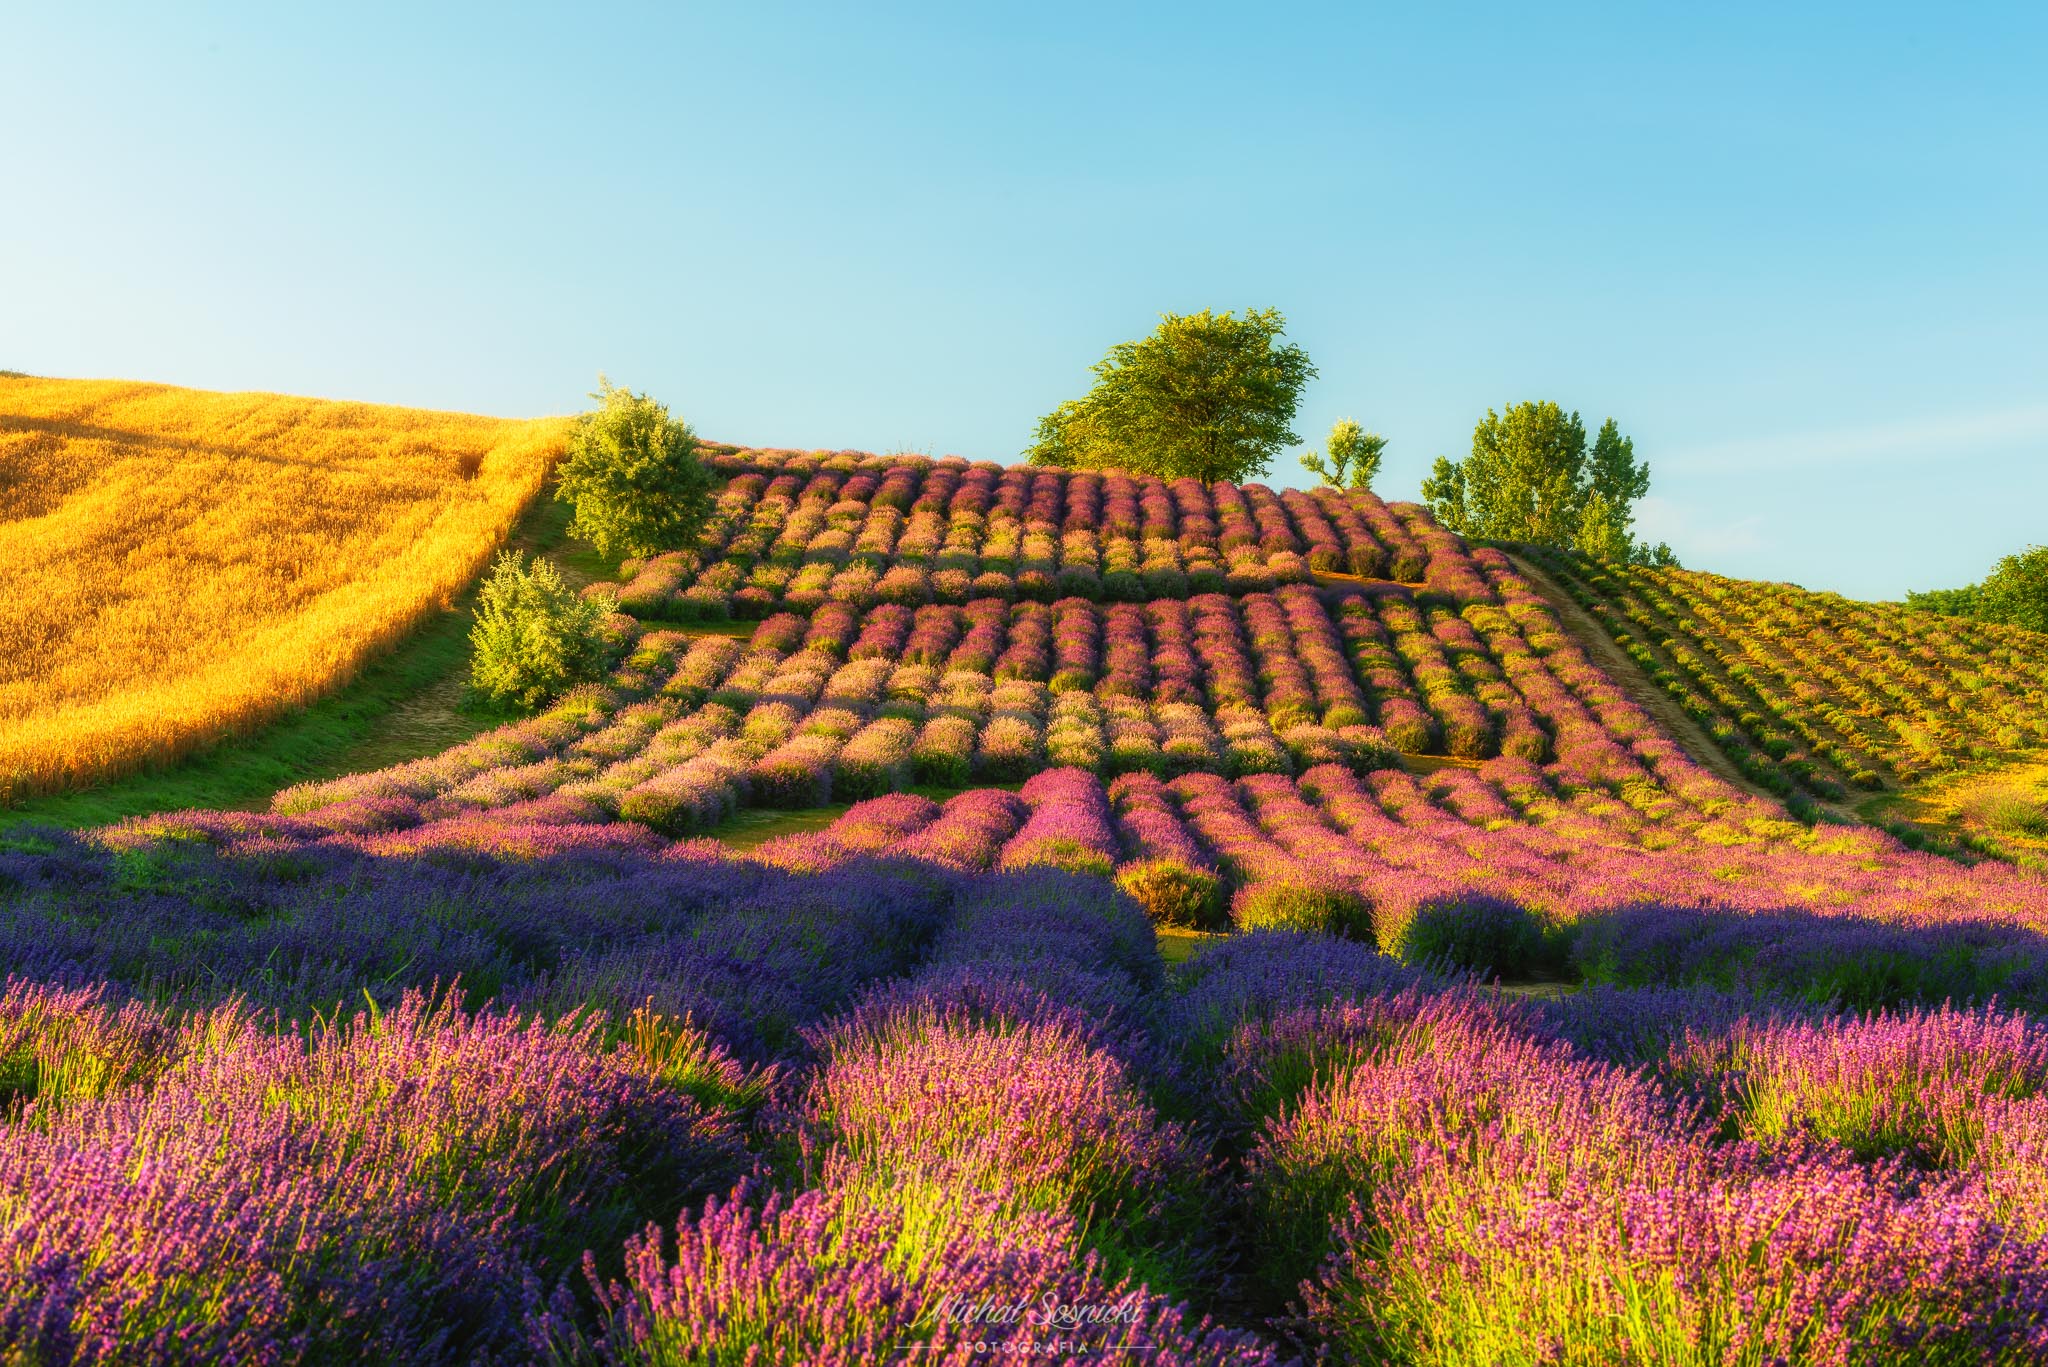 #poland #sunrise #lavender #flowers #morning #color #nature #benro #pentax, Michał Sośnicki